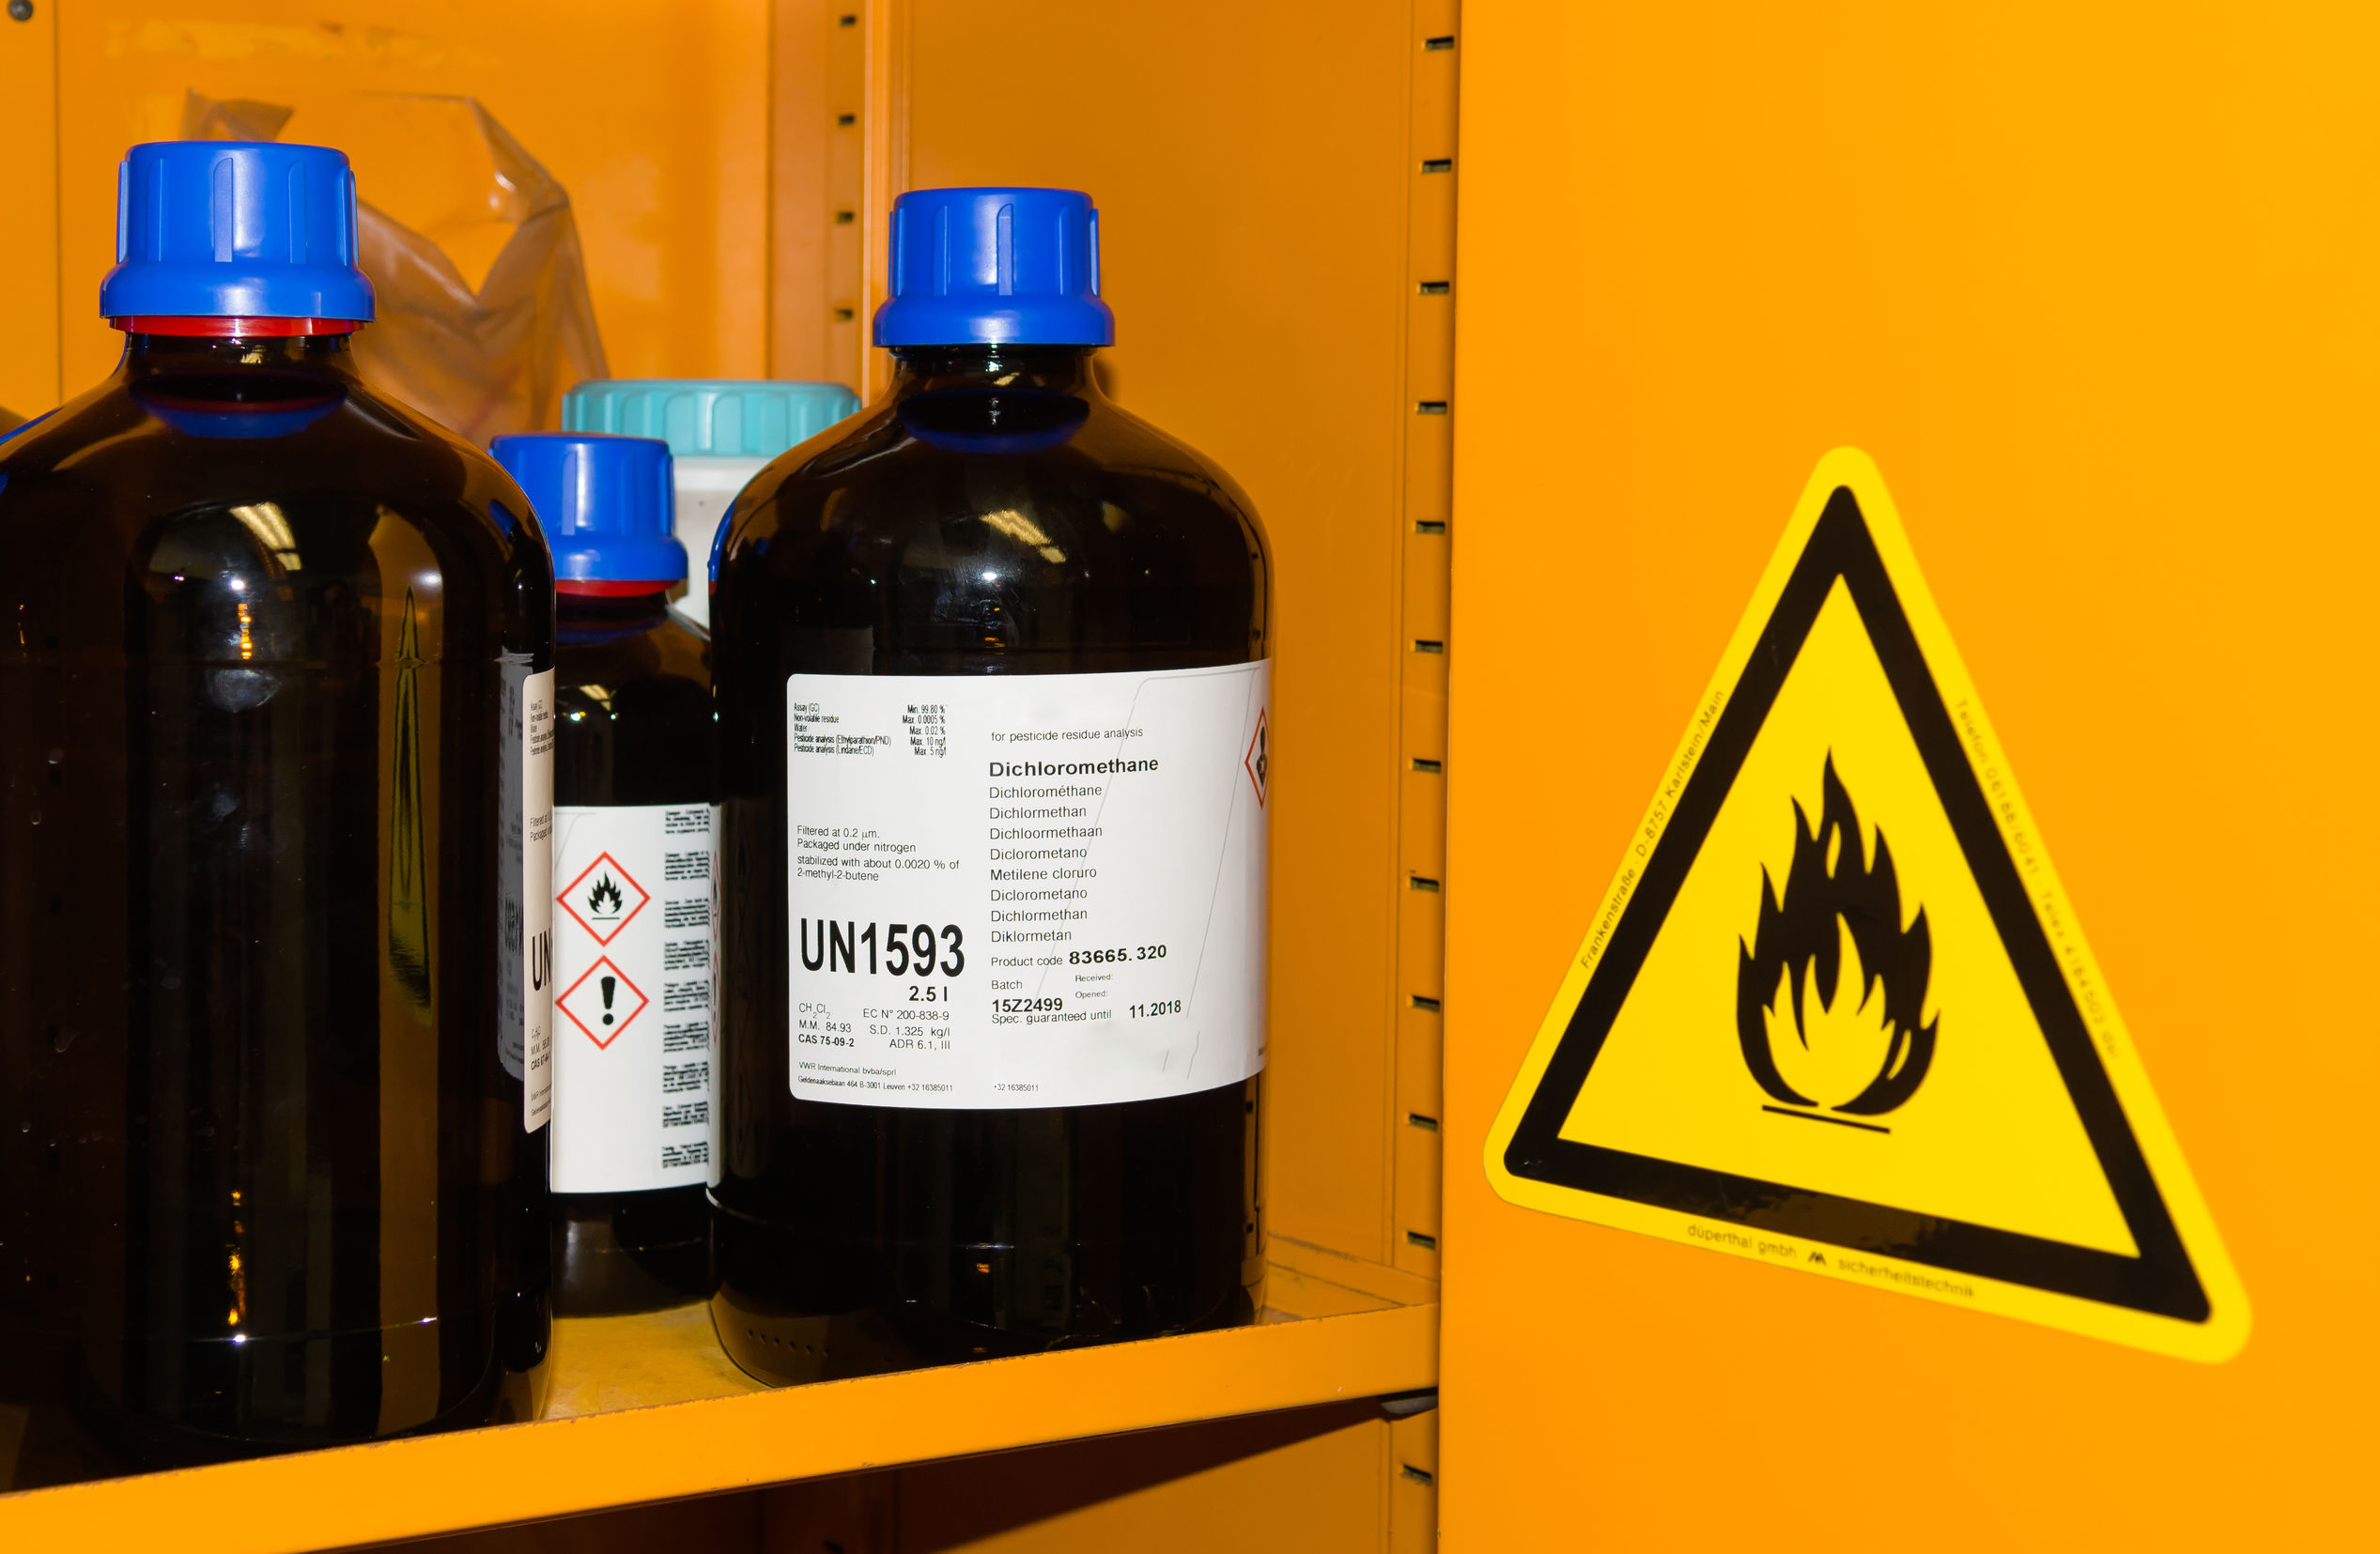 Care and Storage of Hazardous Materials